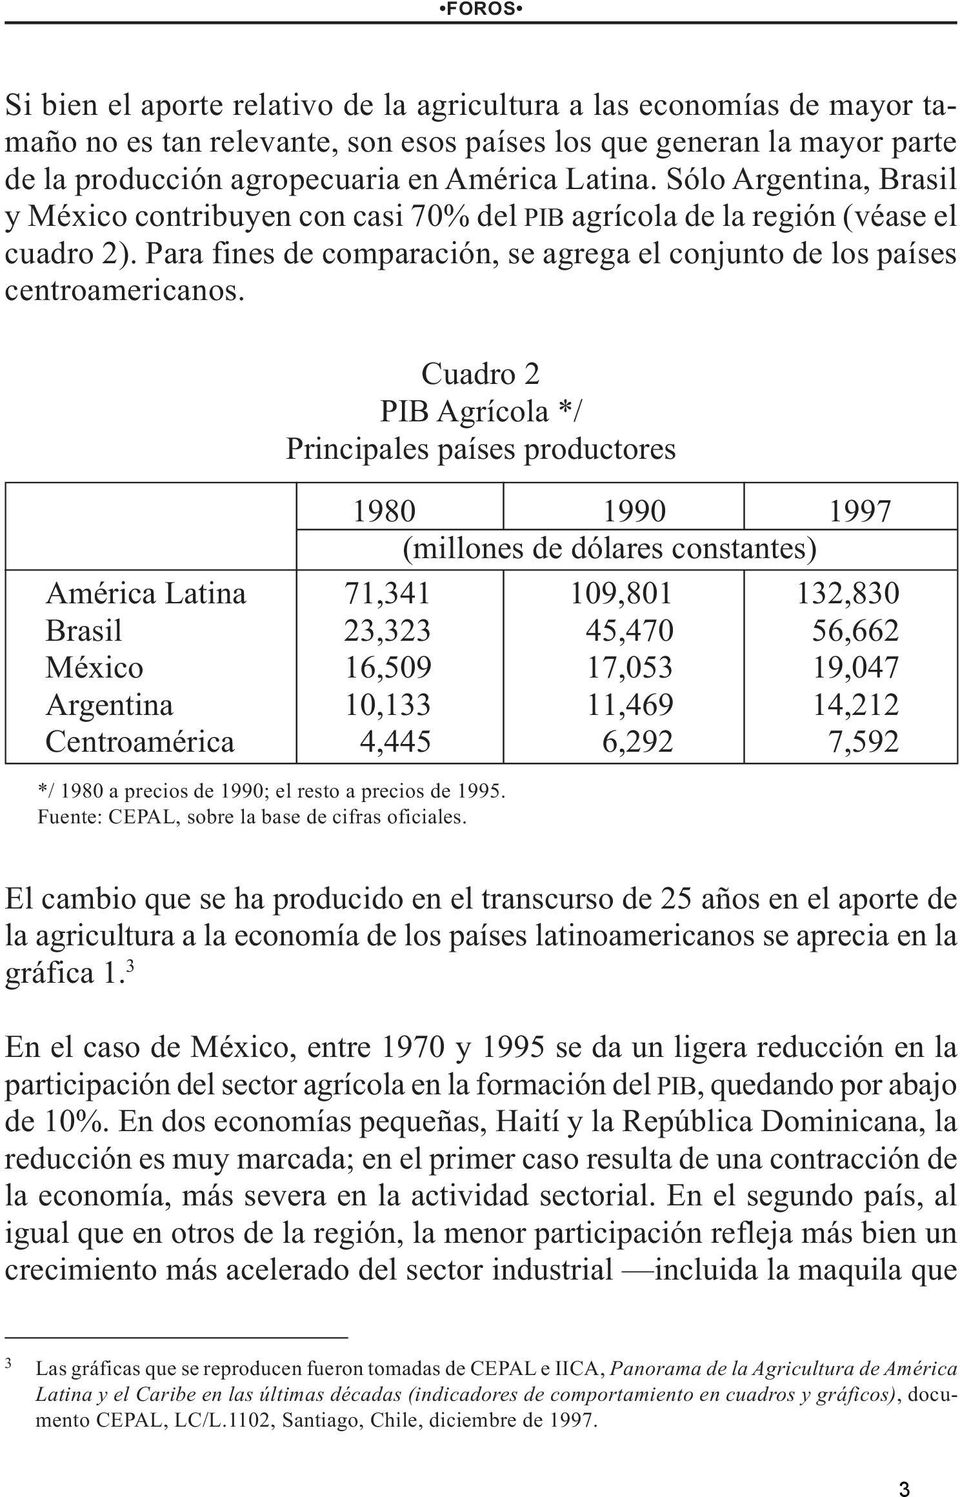 Cuadro 2 PIB Agrícola */ Principales países productores 1980 1990 1997 (millones de dólares constantes) América Latina 71,341 109,801 132,830 Brasil 23,323 45,470 56,662 México 16,509 17,053 19,047